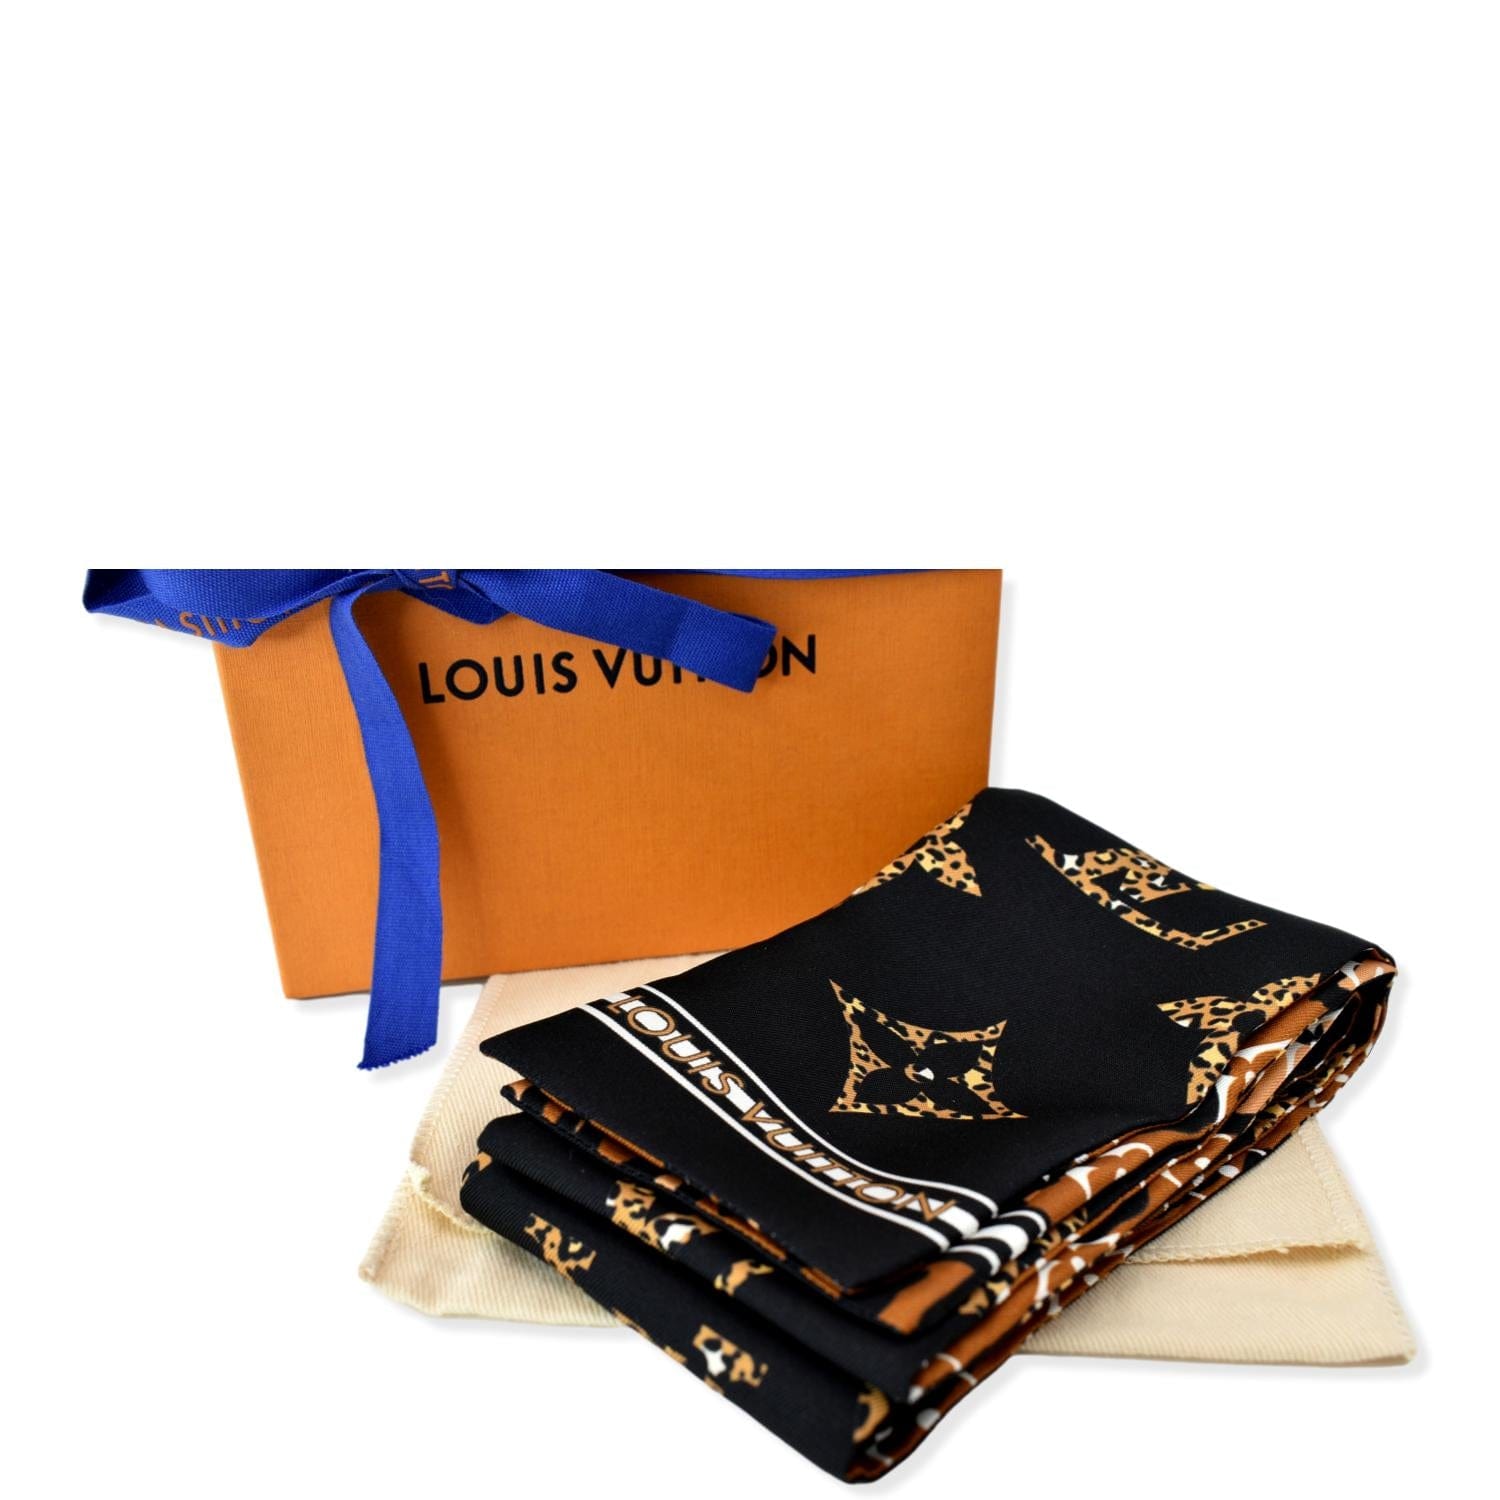 $200 HEADSCARF ?!? 😱😳  Louis Vuitton Monogram Confidential Bandeau - Is  it WORTH the money ?? 🤔 